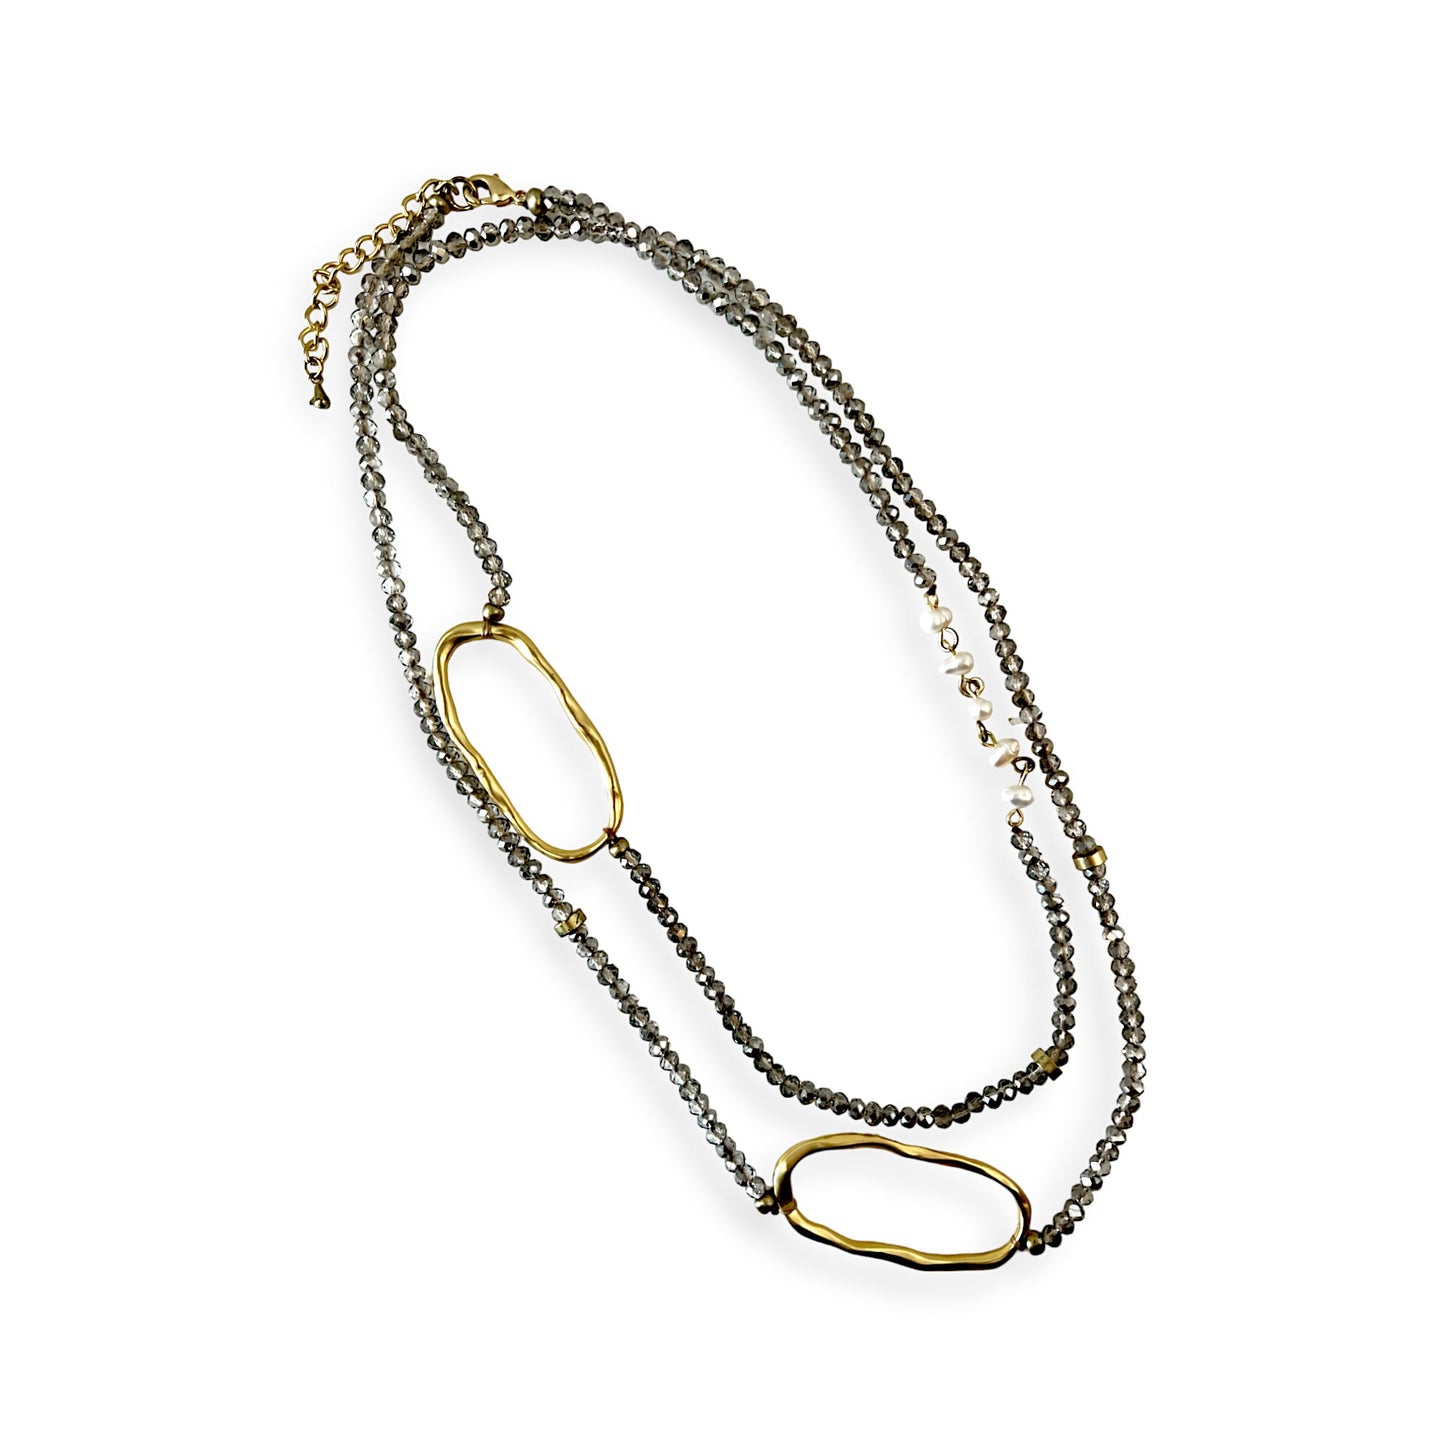 Modern beaded necklace with pearls - Sundara Joon